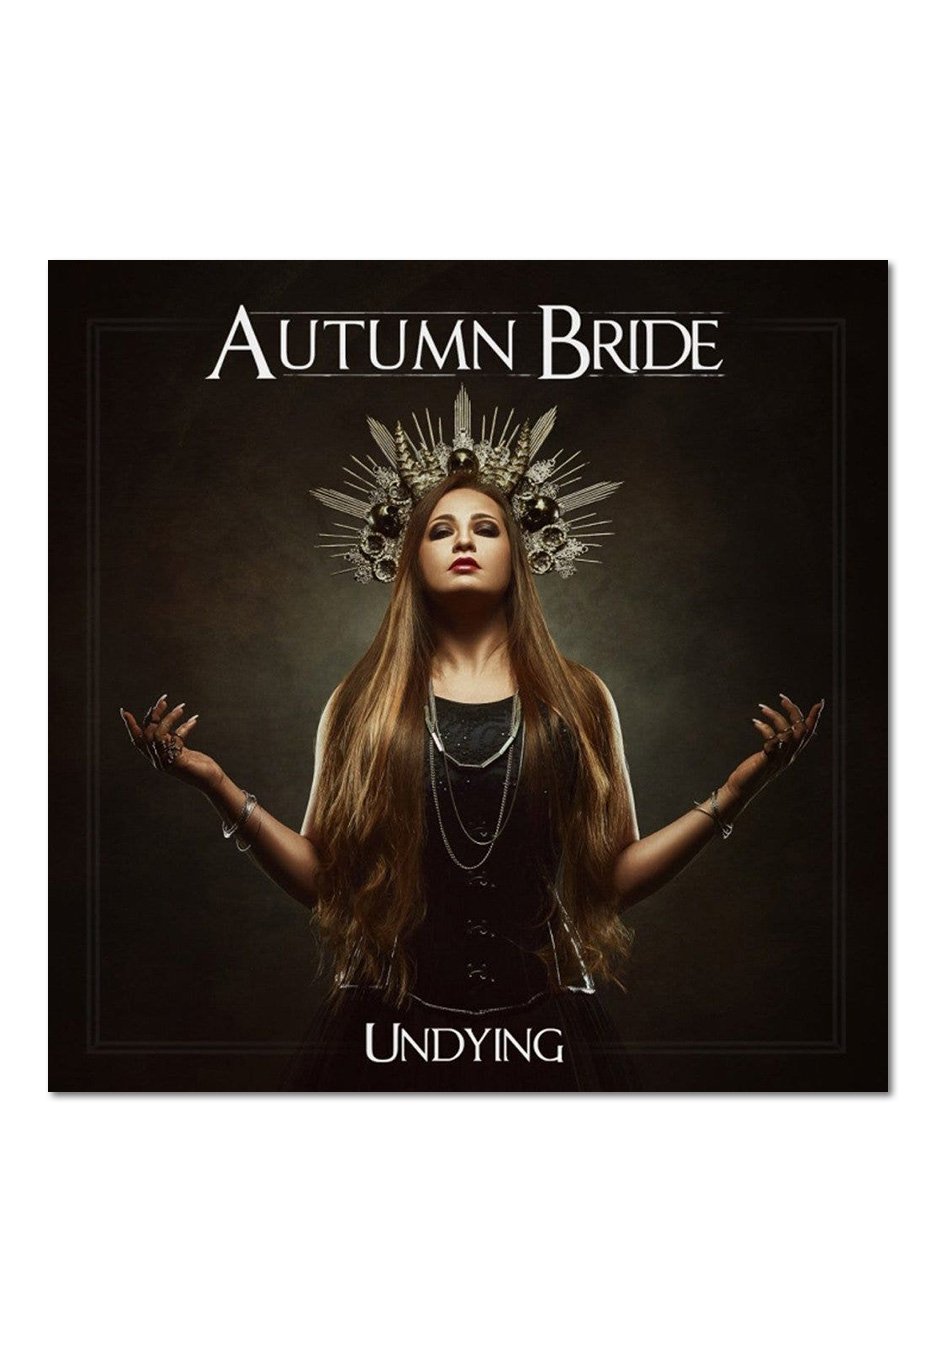 Autumn Bride - Undying - Digipak CD